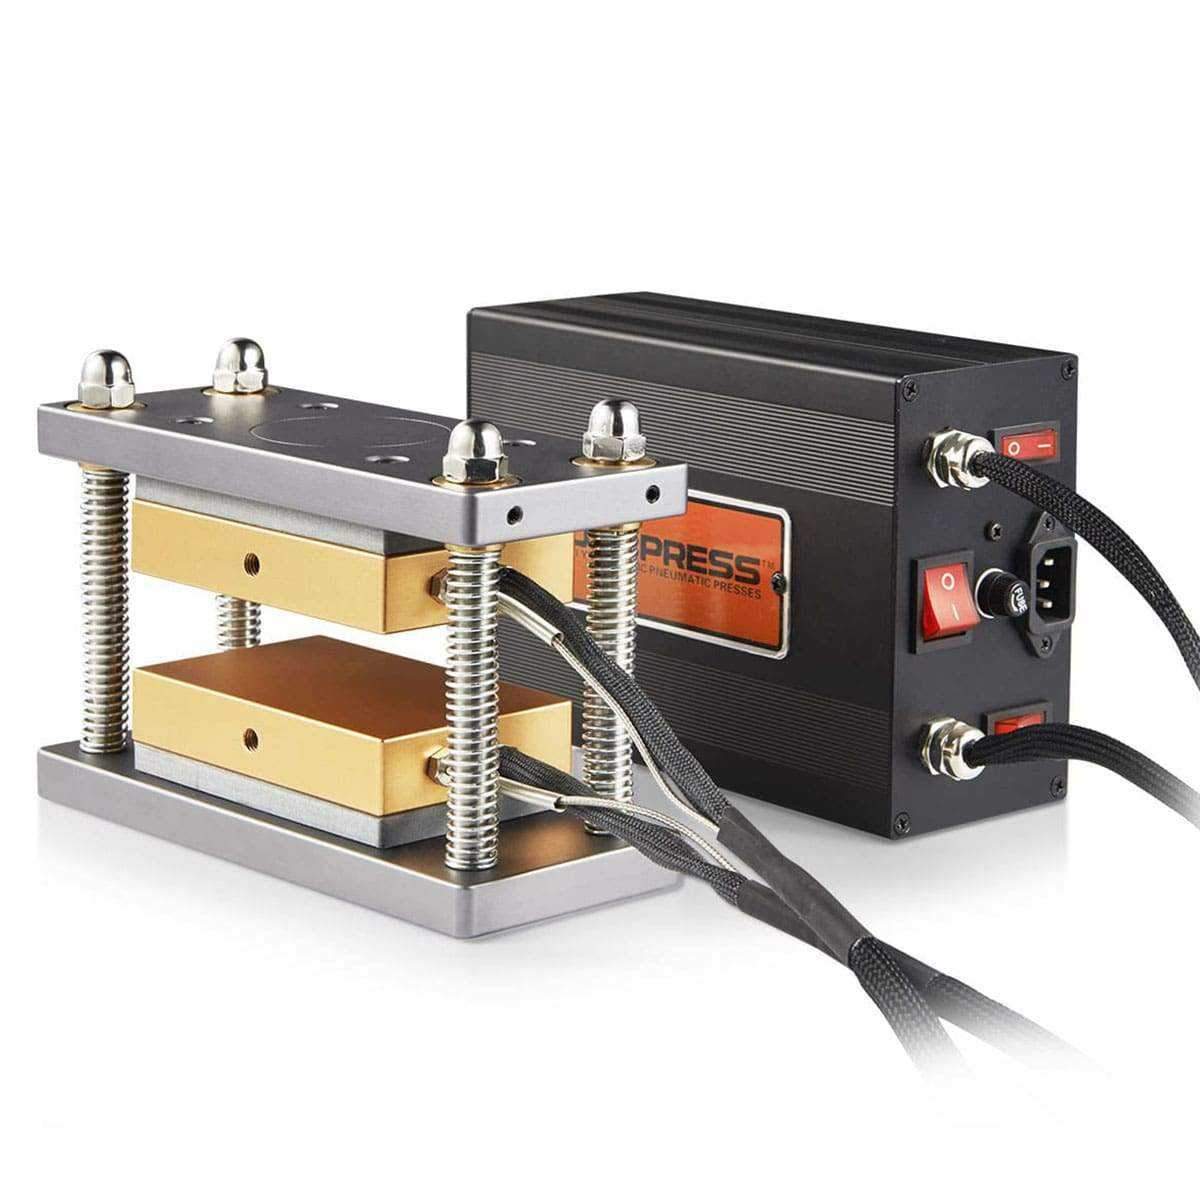 3x5 DIY Caged Rosin Press Kit - Build A 10-12 Ton Rosin Heat Press Machine for Personal Use - Build A 10-12 Ton Rosin Heat Press Machine for Personal Use | Dabpress